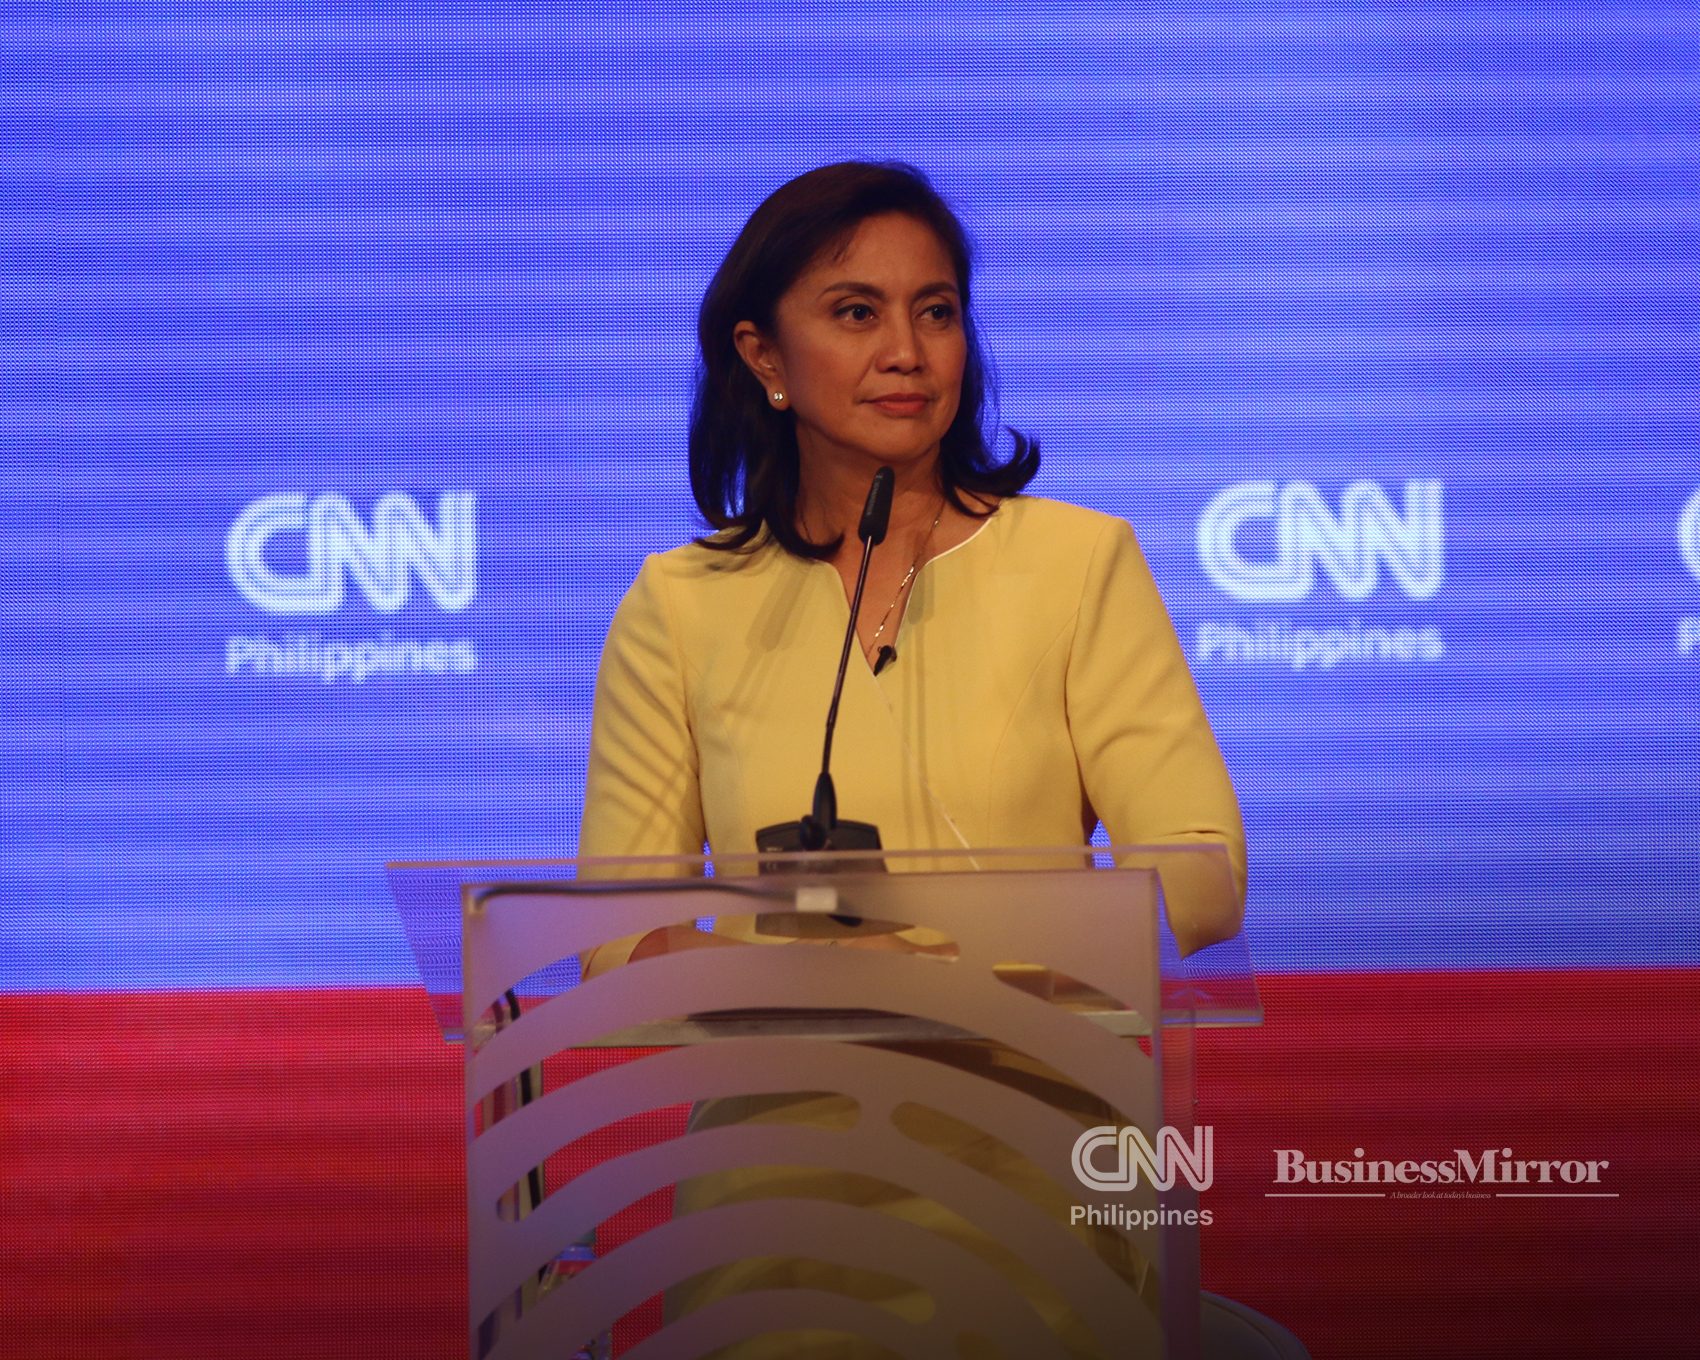 Who was overall winner of VP debate? Netizens choose Robredo